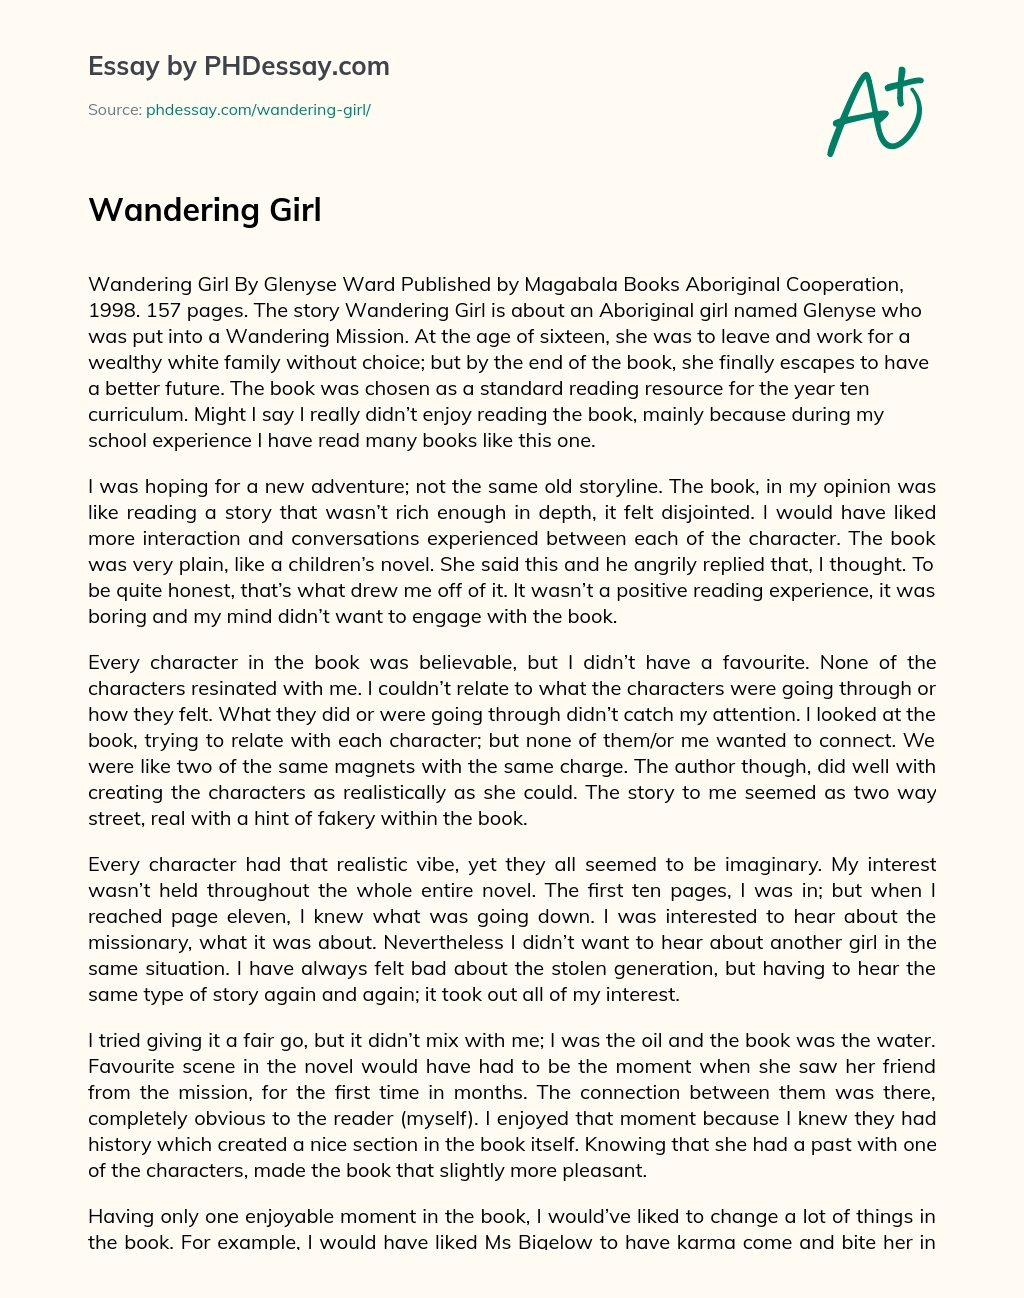 Wandering Girl essay